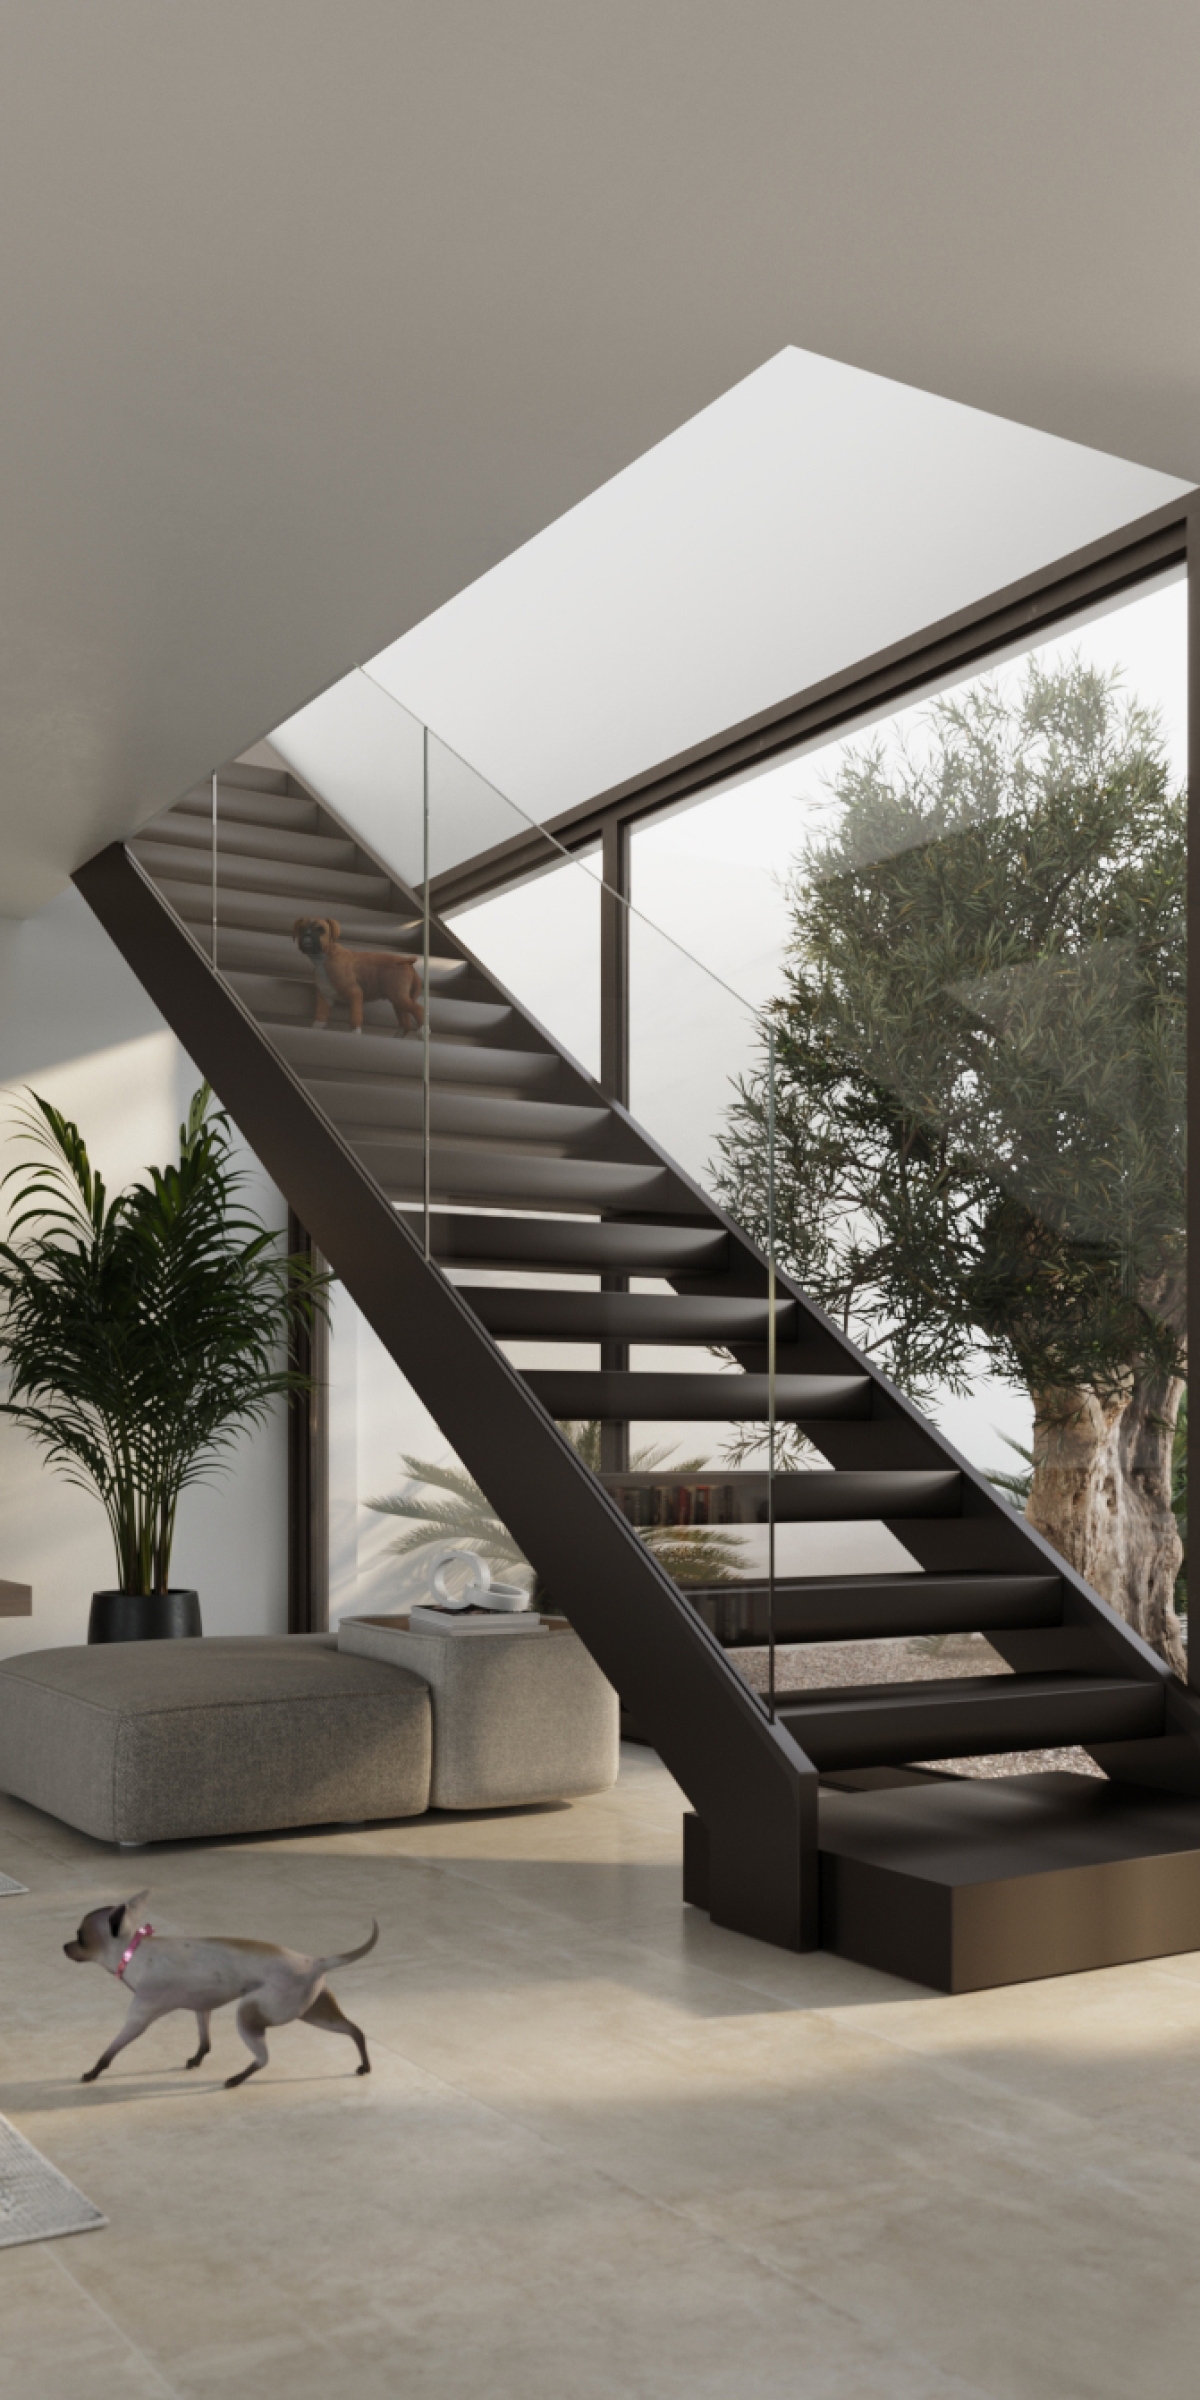 Casa modular de estilo moderno lujoso en Madrid con interiorismo escaleras voladas